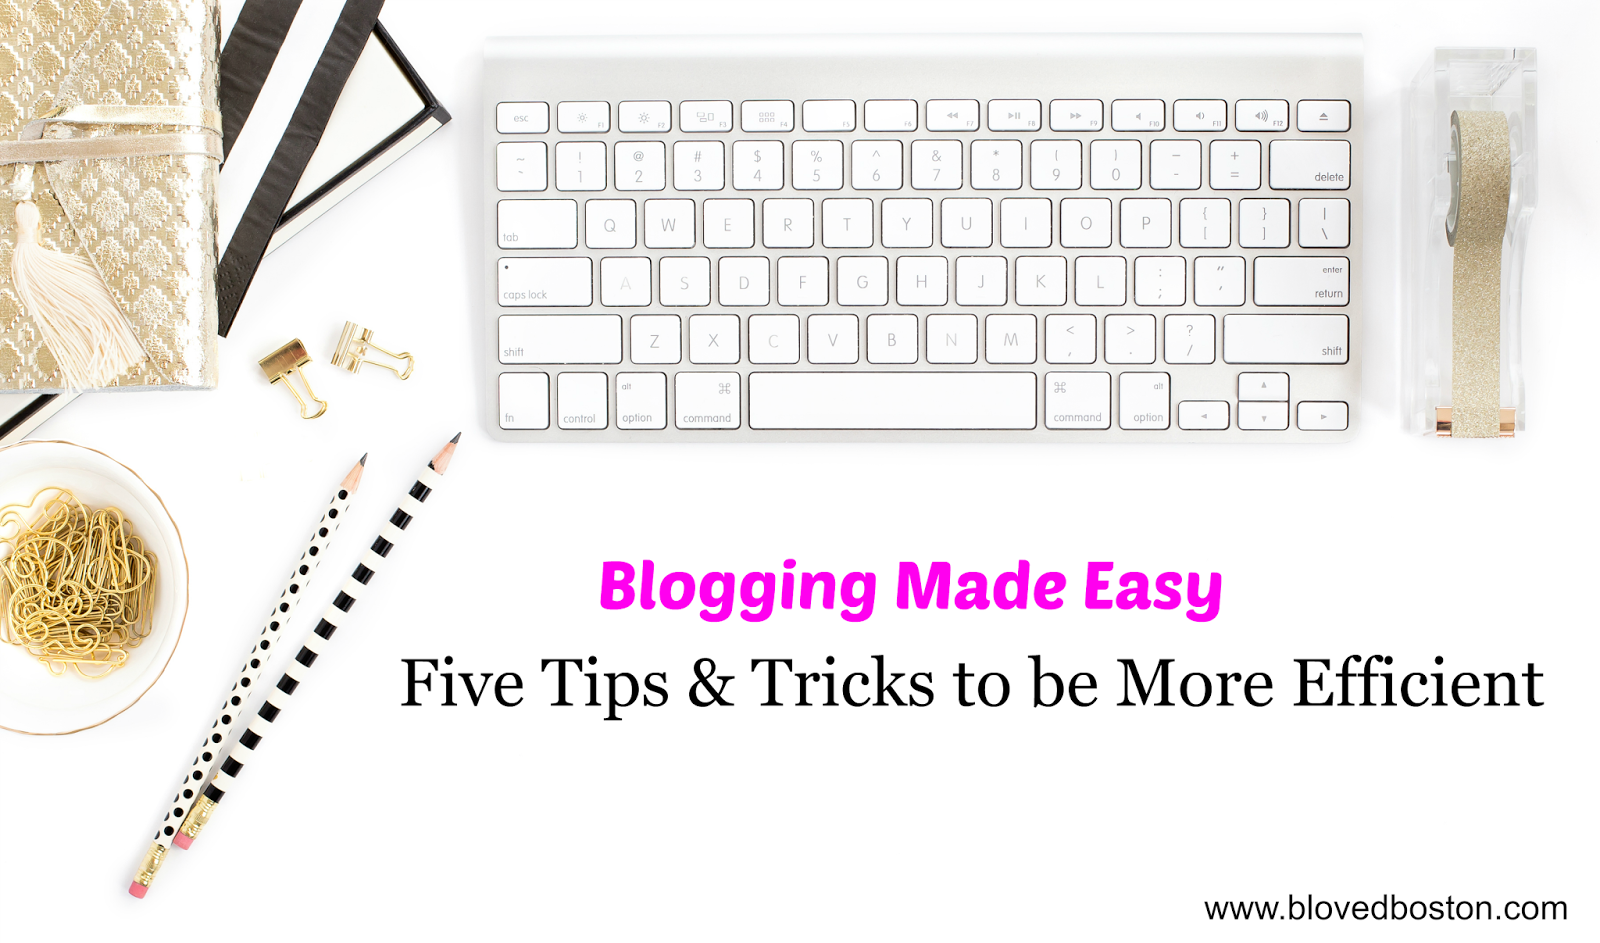 Tips And Tricks To Make Blogging Easier